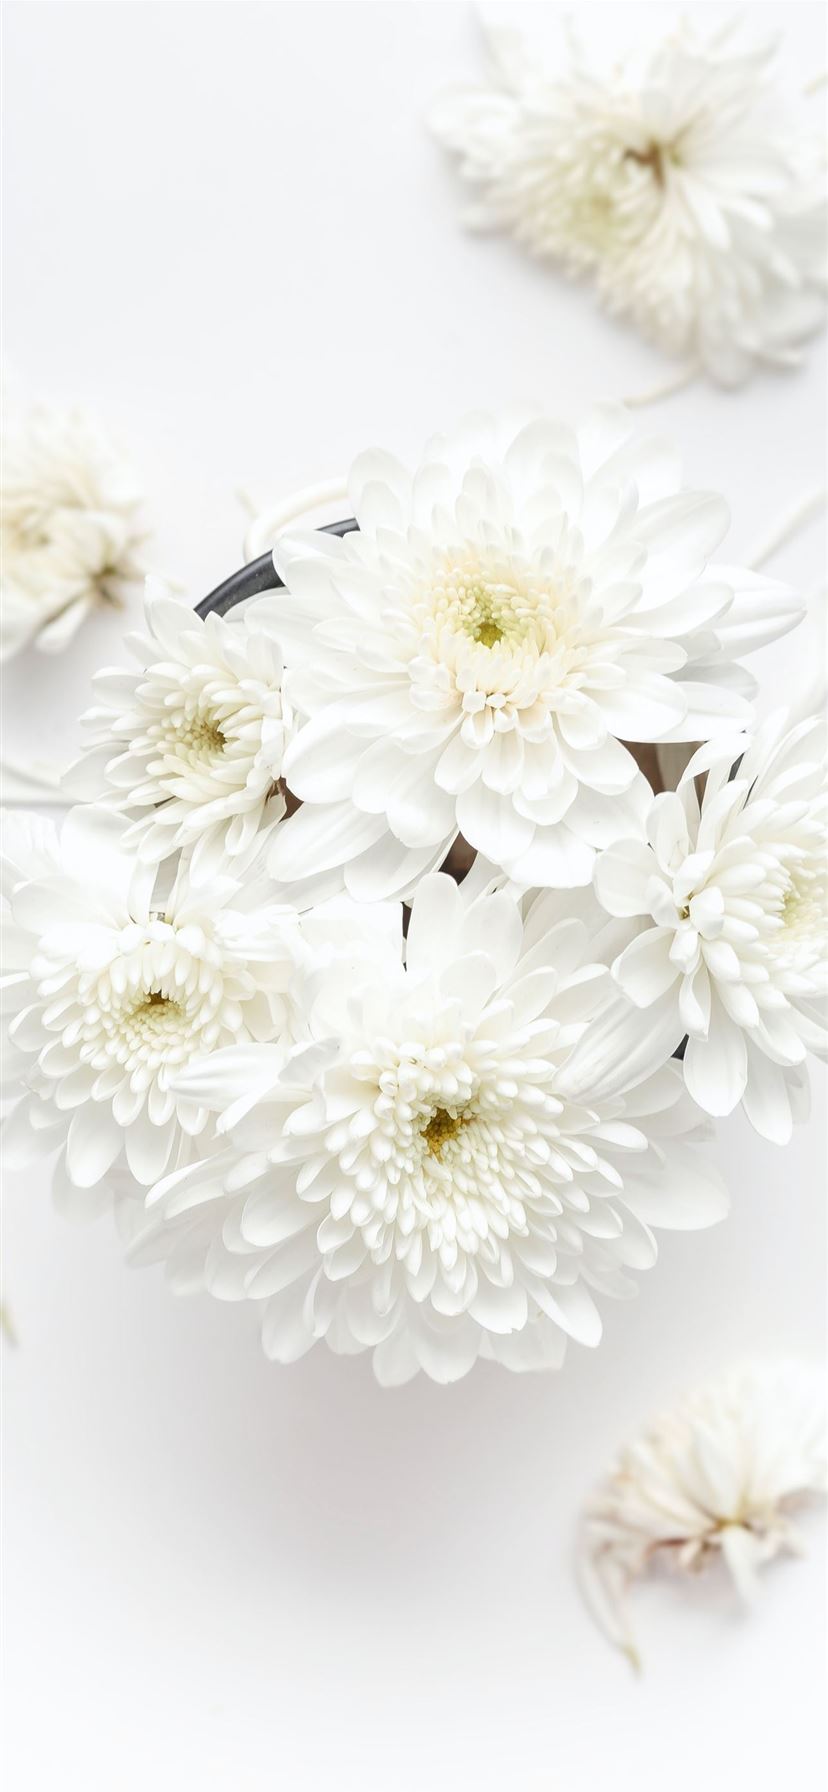 white petaled flower on white background iPhone 11 wallpaper 